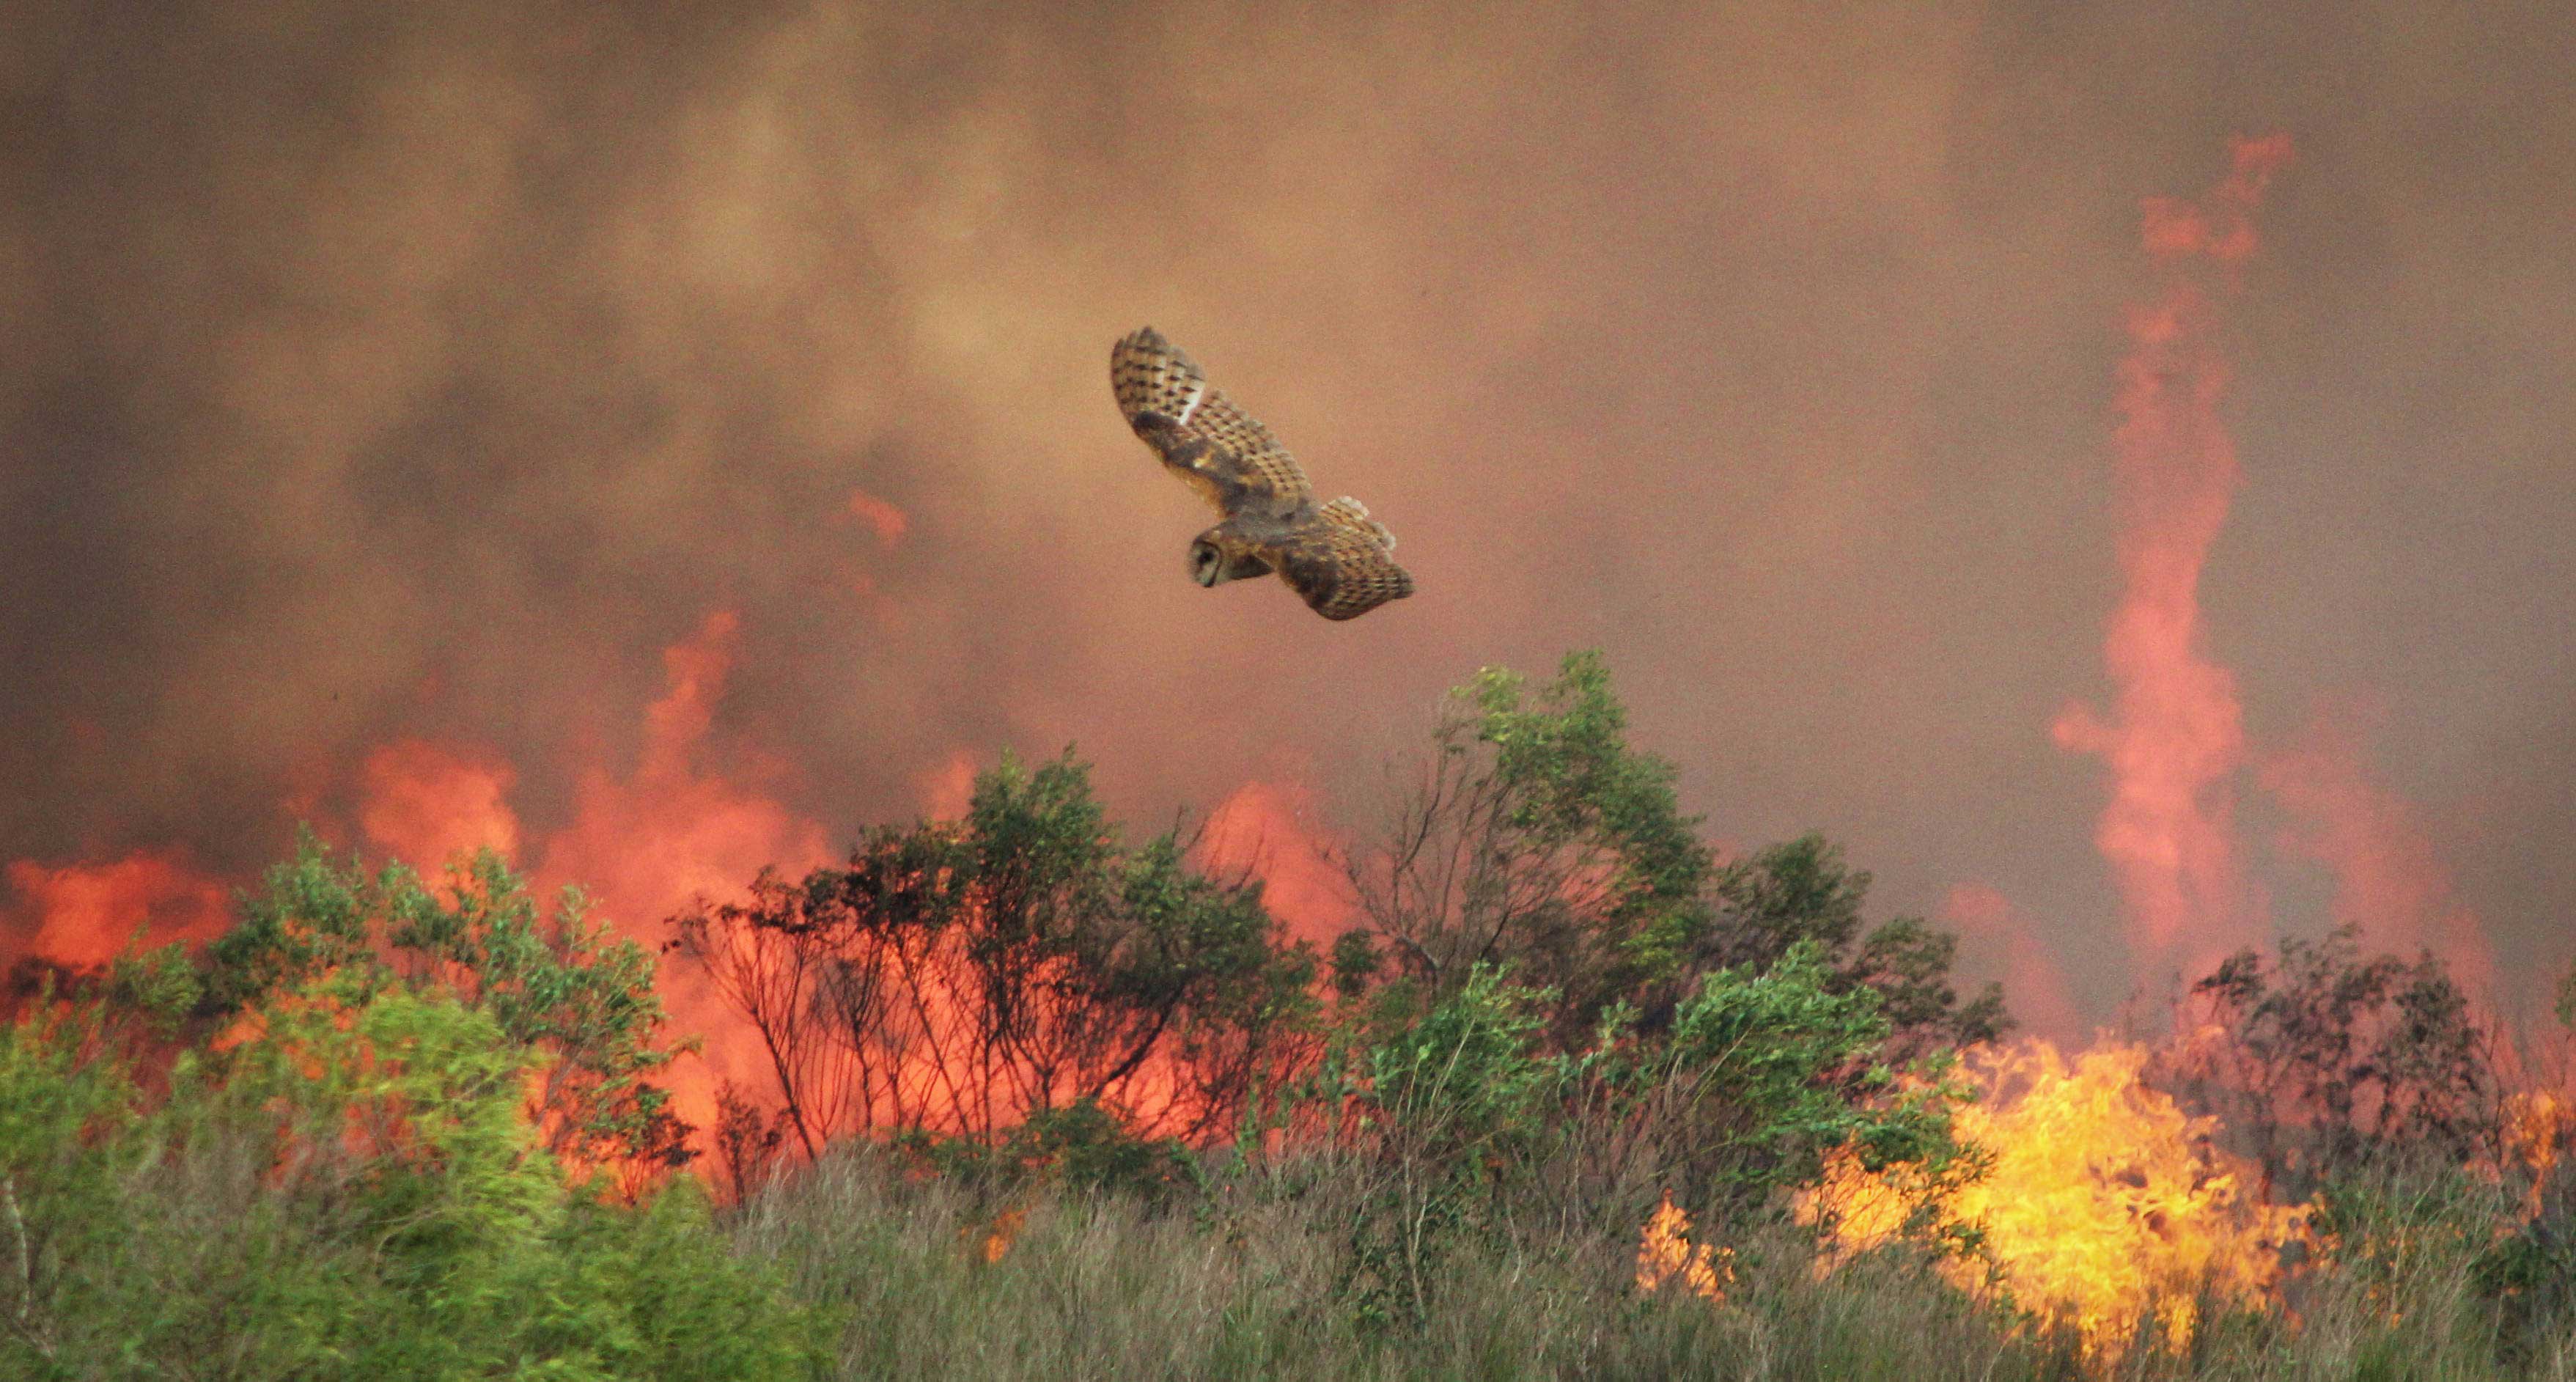 An owl flies over burning vegetation and smoke